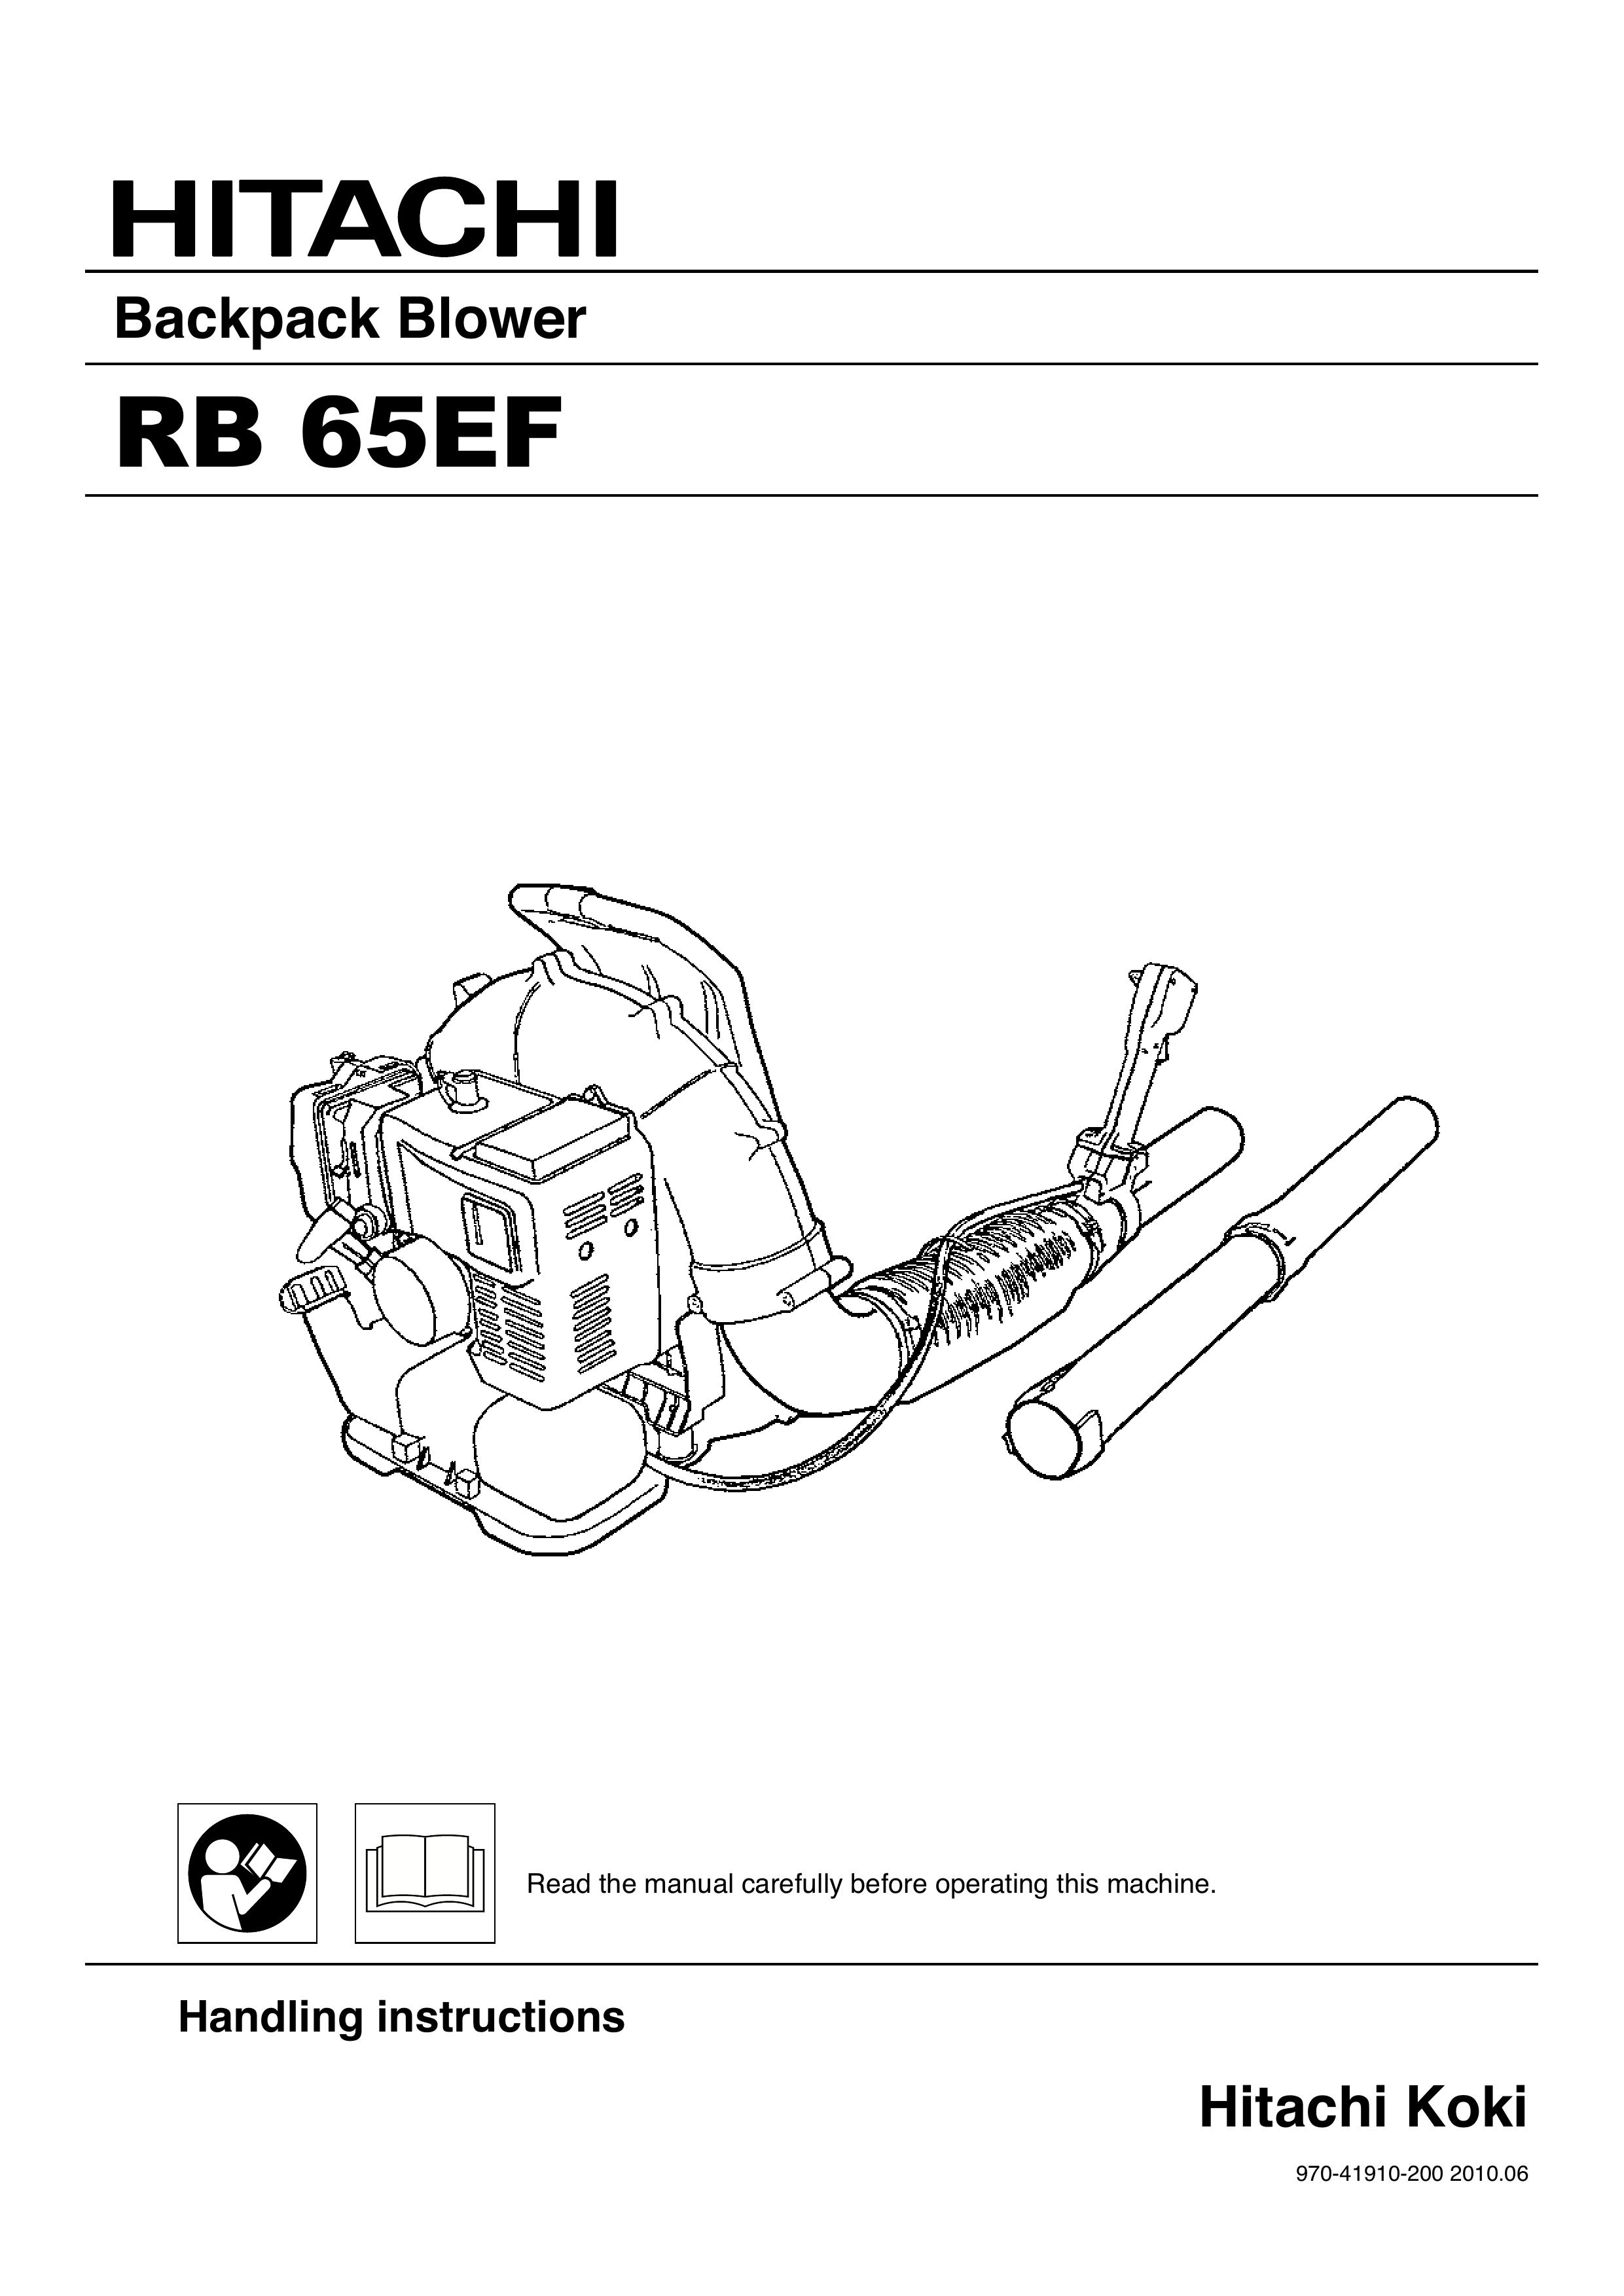 Hitachi RB 65EF Blower User Manual